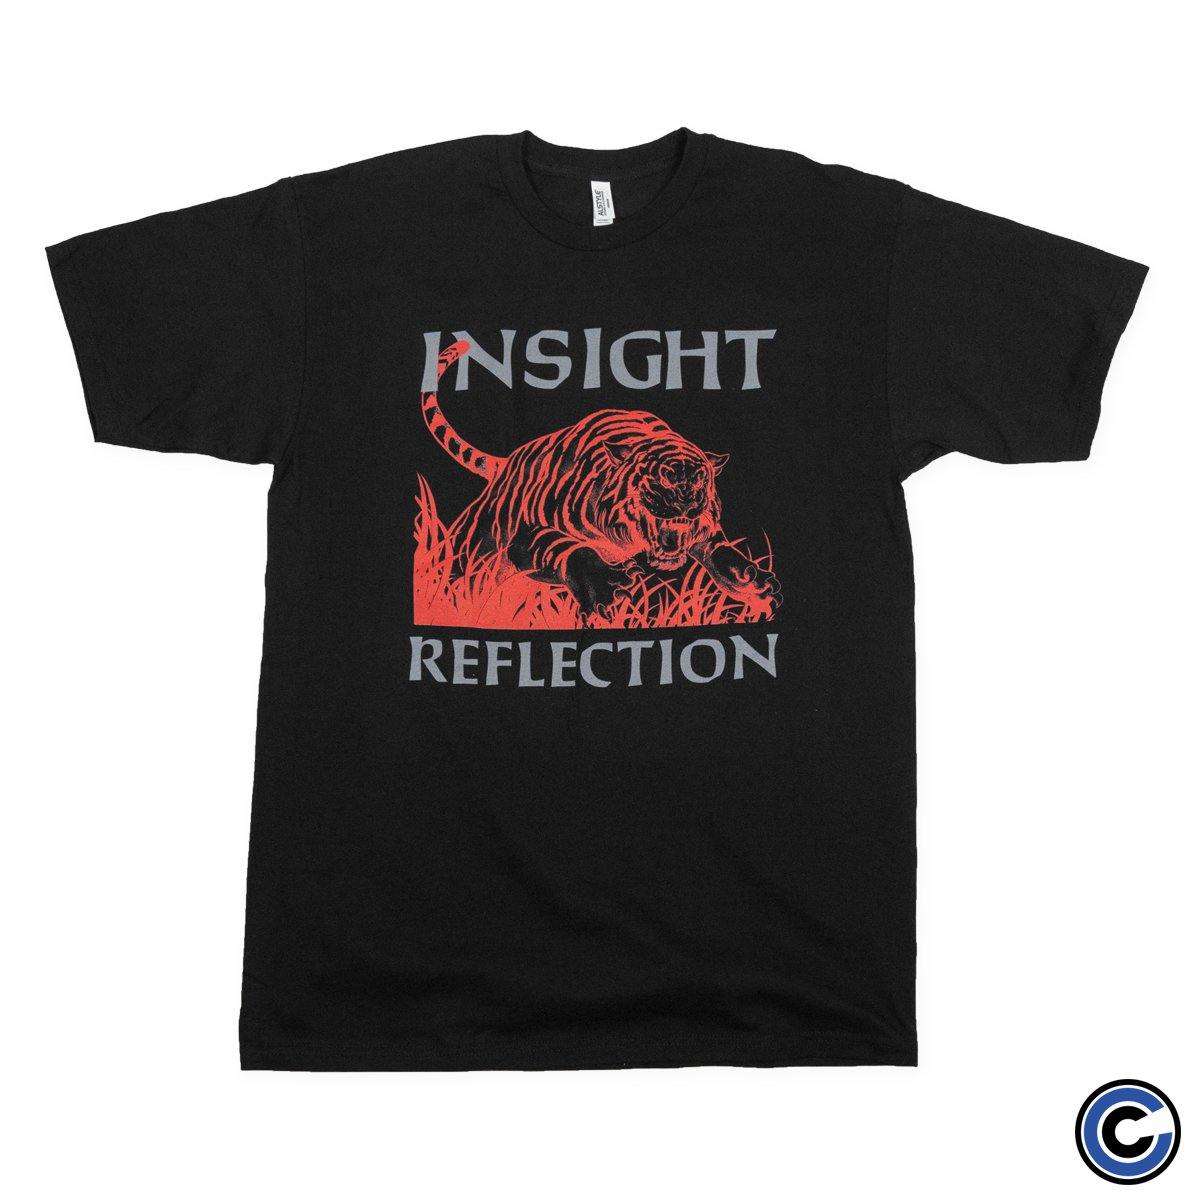 Buy – Insight "Reflection" Shirt – Band & Music Merch – Cold Cuts Merch